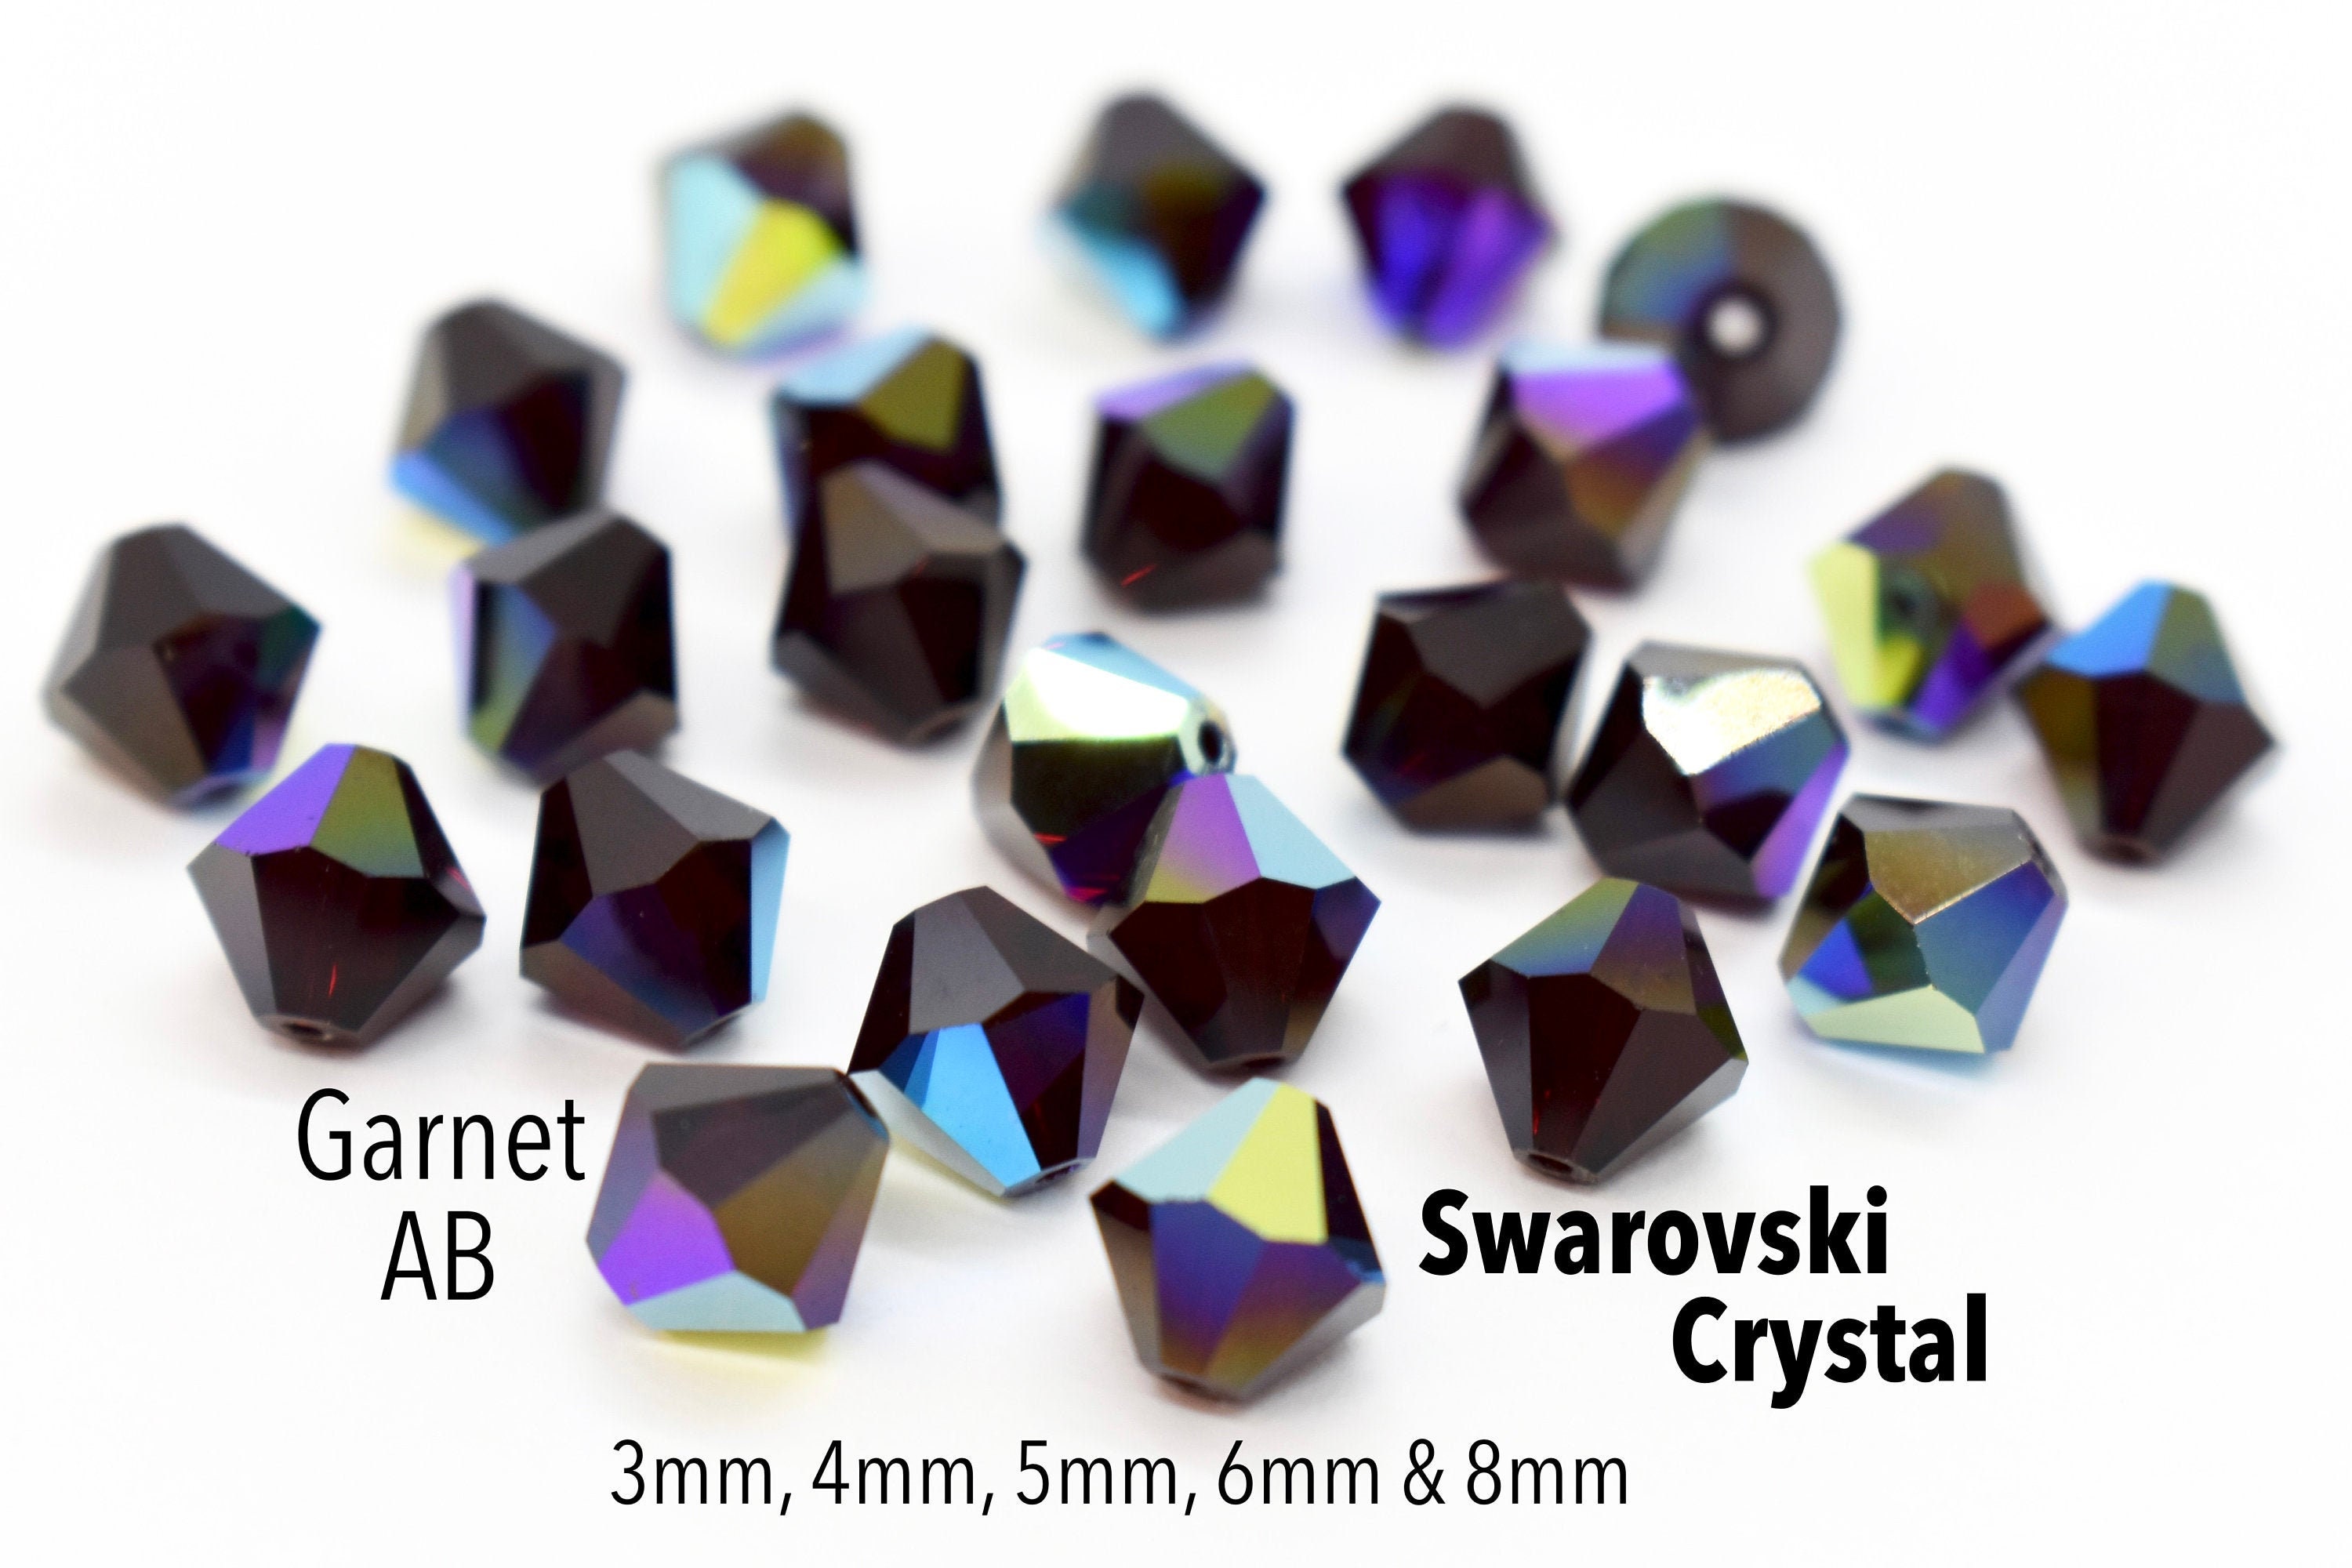  144 pcs Crystal AB (001 AB) Swarovski NEW 2088 Xirius 20ss Flat  backs Rhinestones 5mm ss20 : Arts, Crafts & Sewing